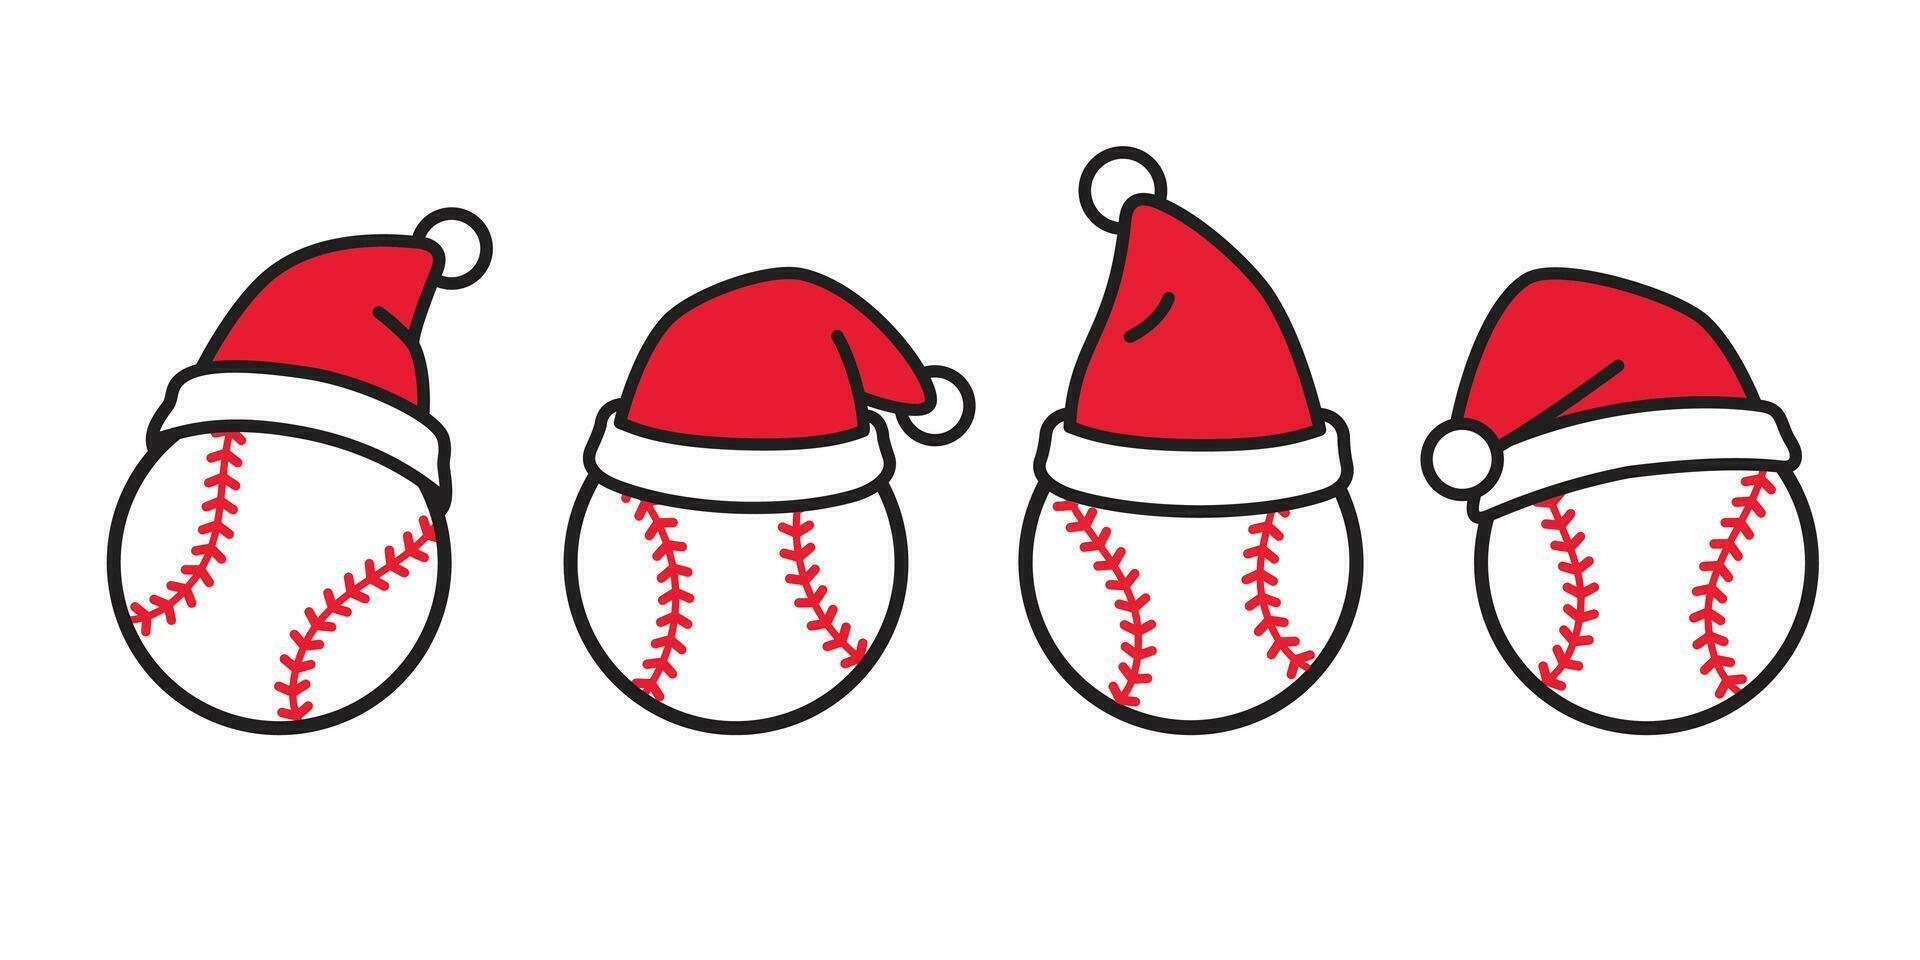 baseball vector Christmas icon Santa Claus hat logo softball sport cartoon character symbol doodle illustration design